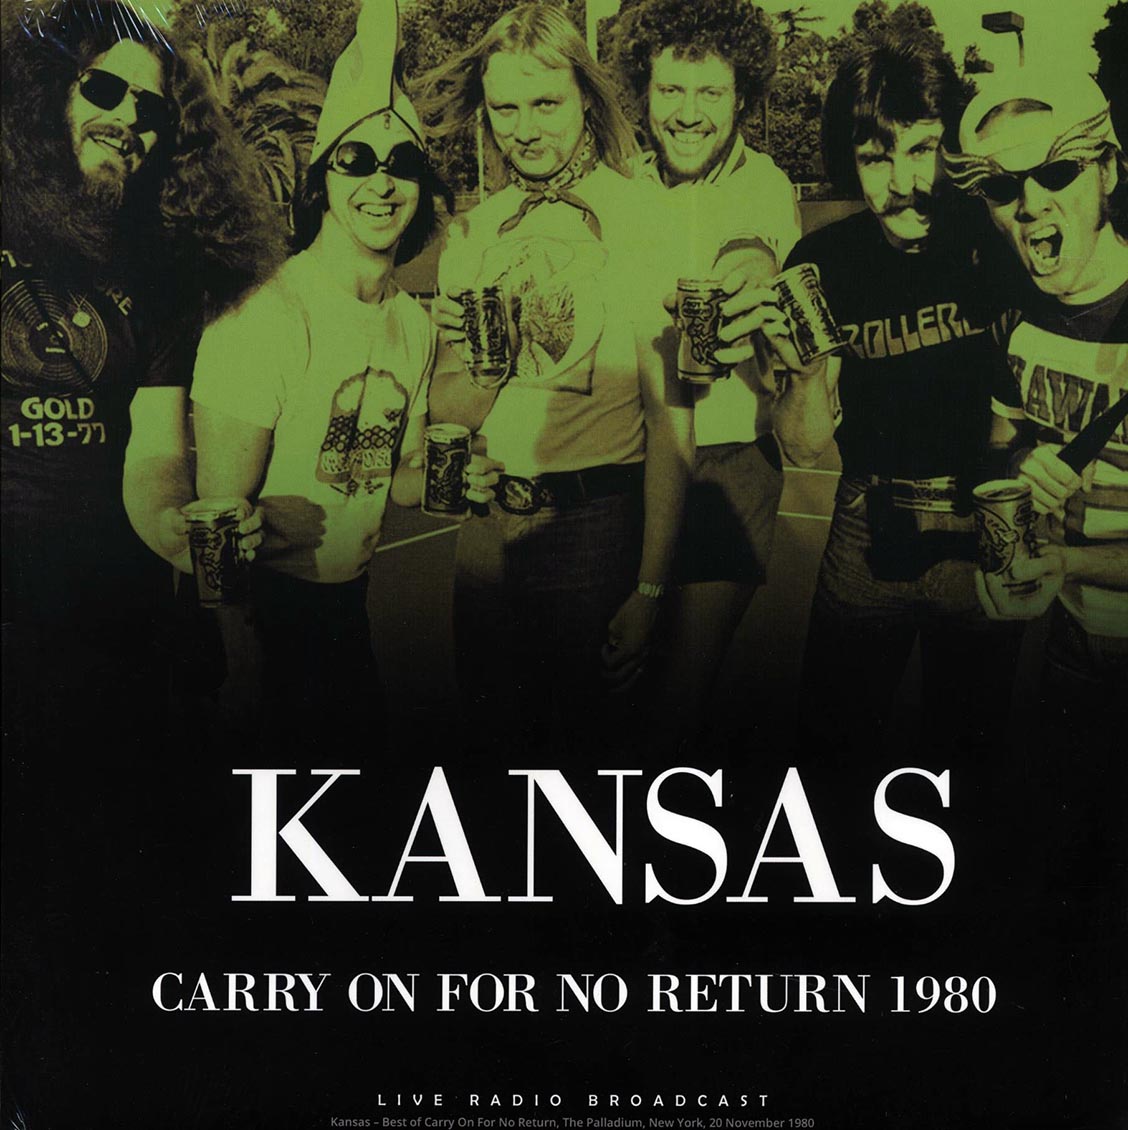 Kansas - Carry On For No Return 1980: The Palladium, New York, 20th November - Vinyl LP